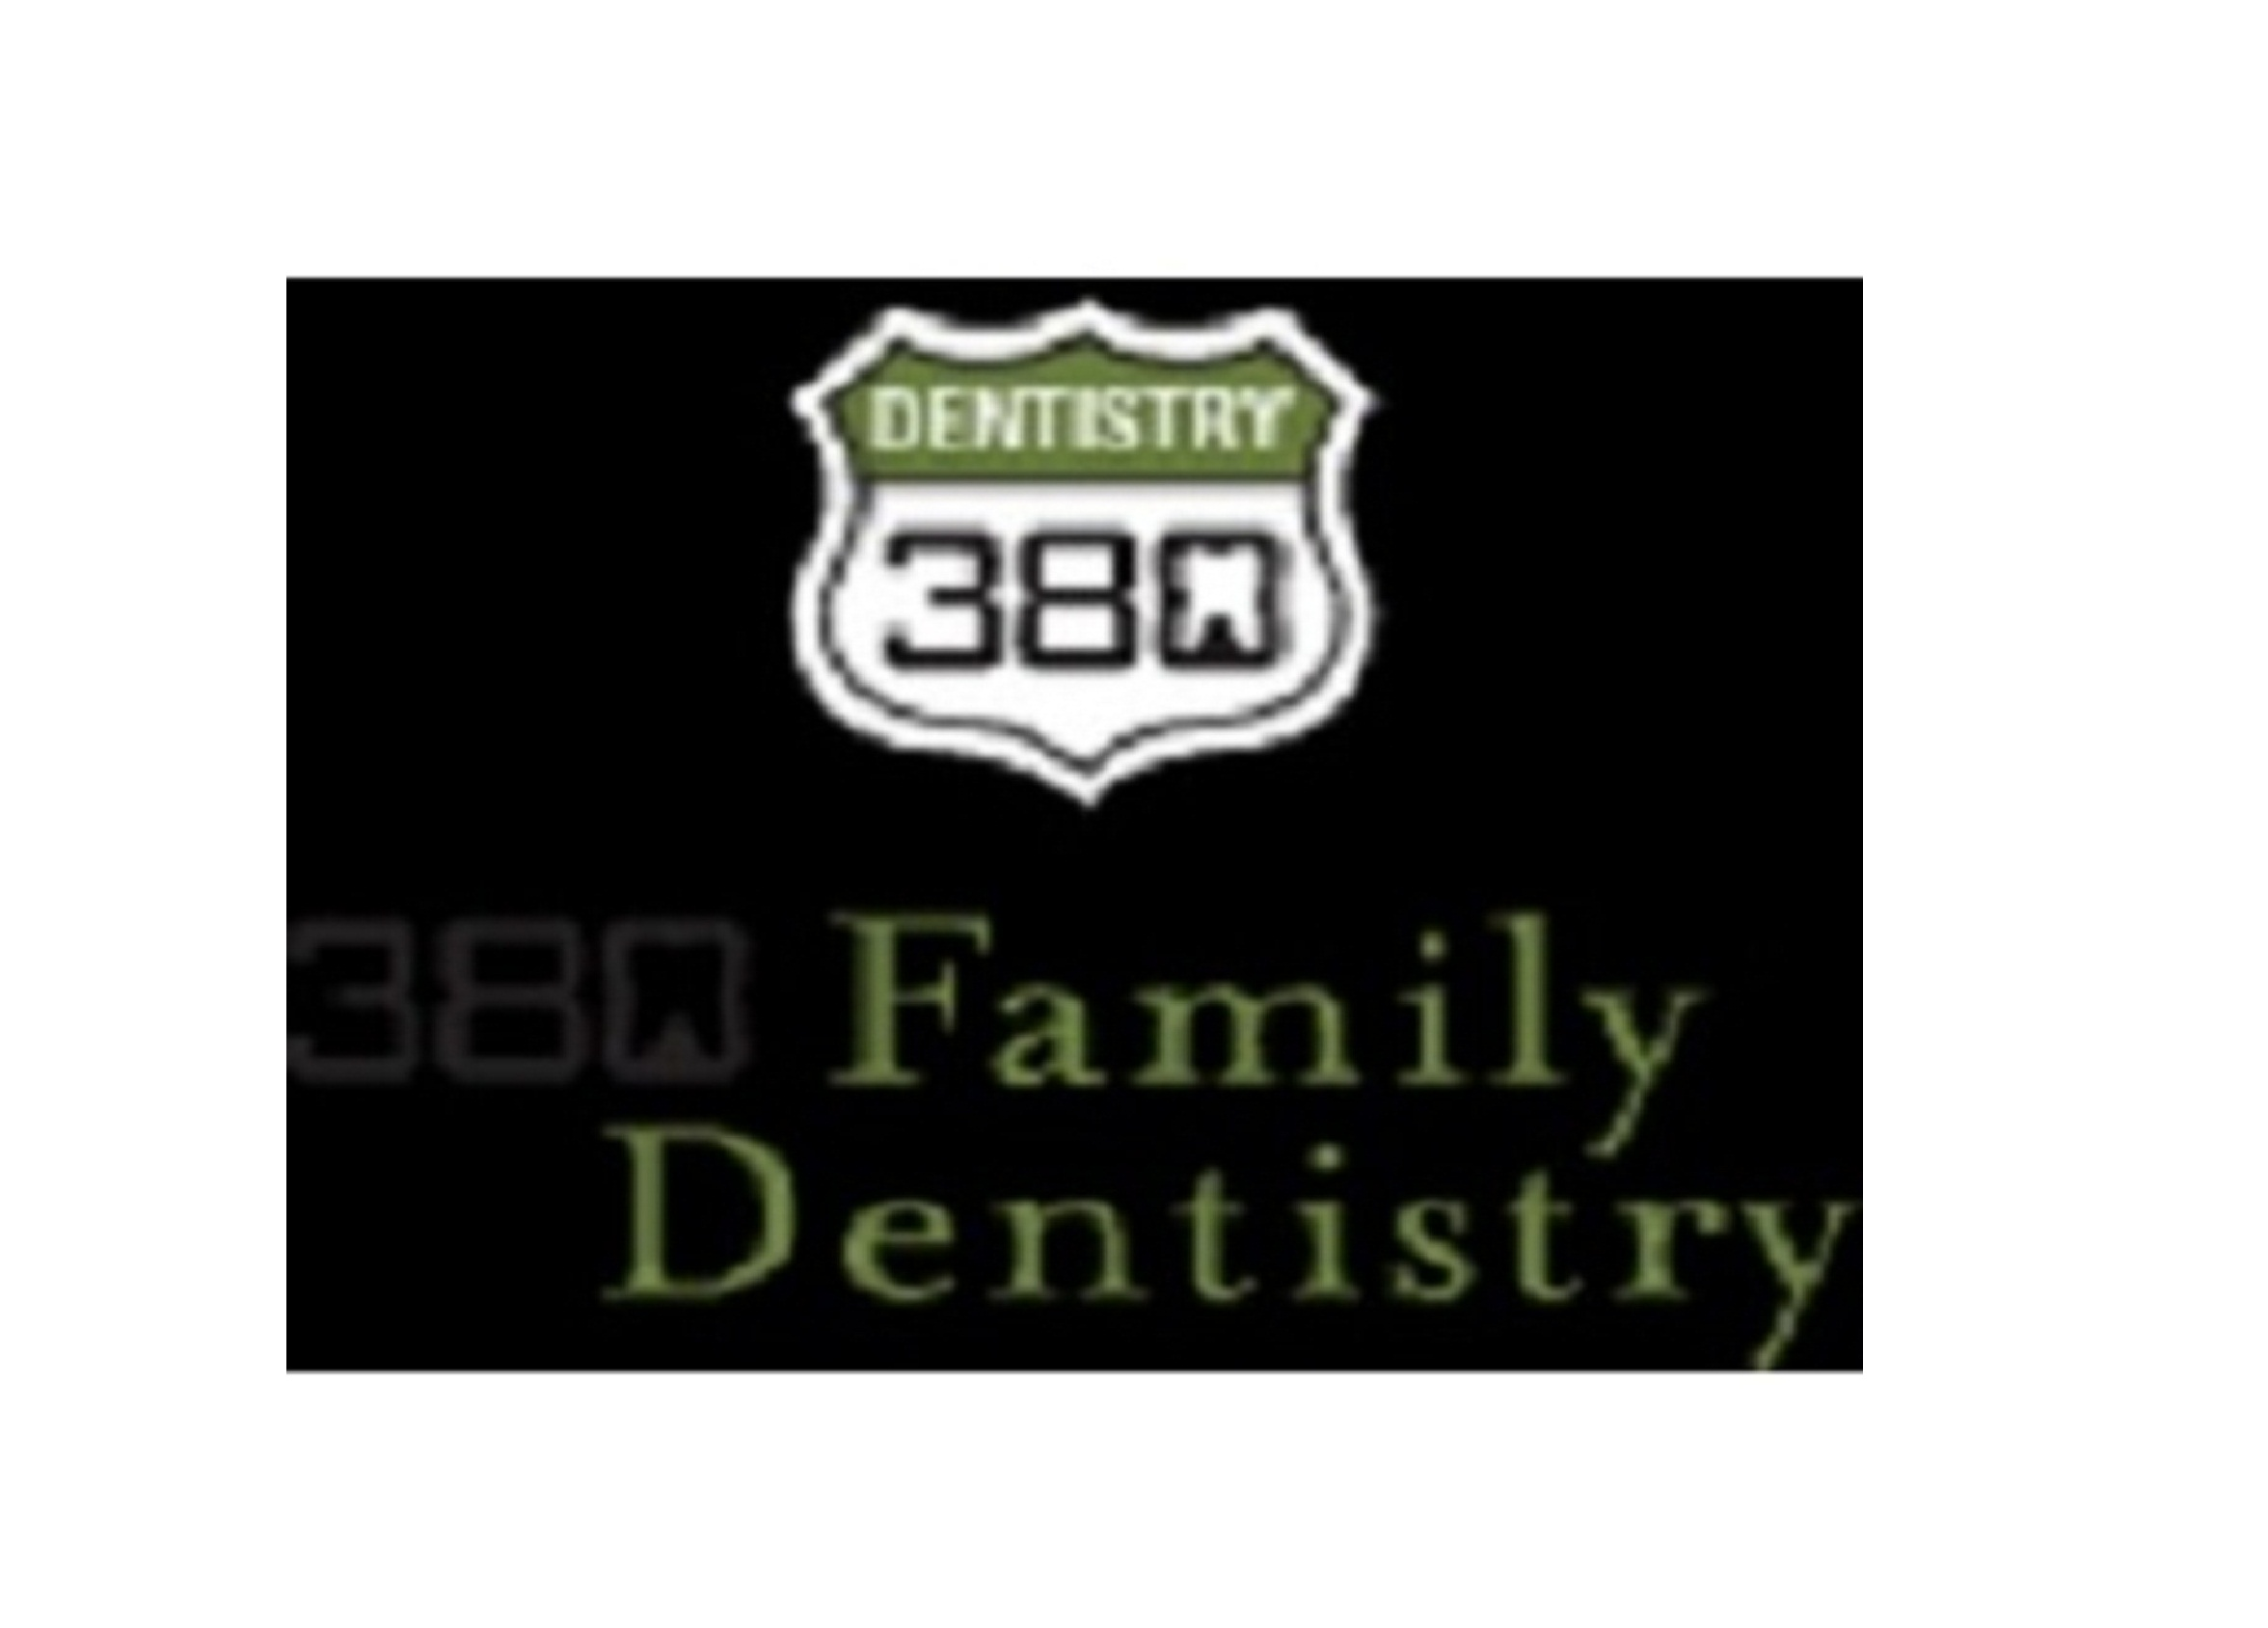 380 Family Dentistry